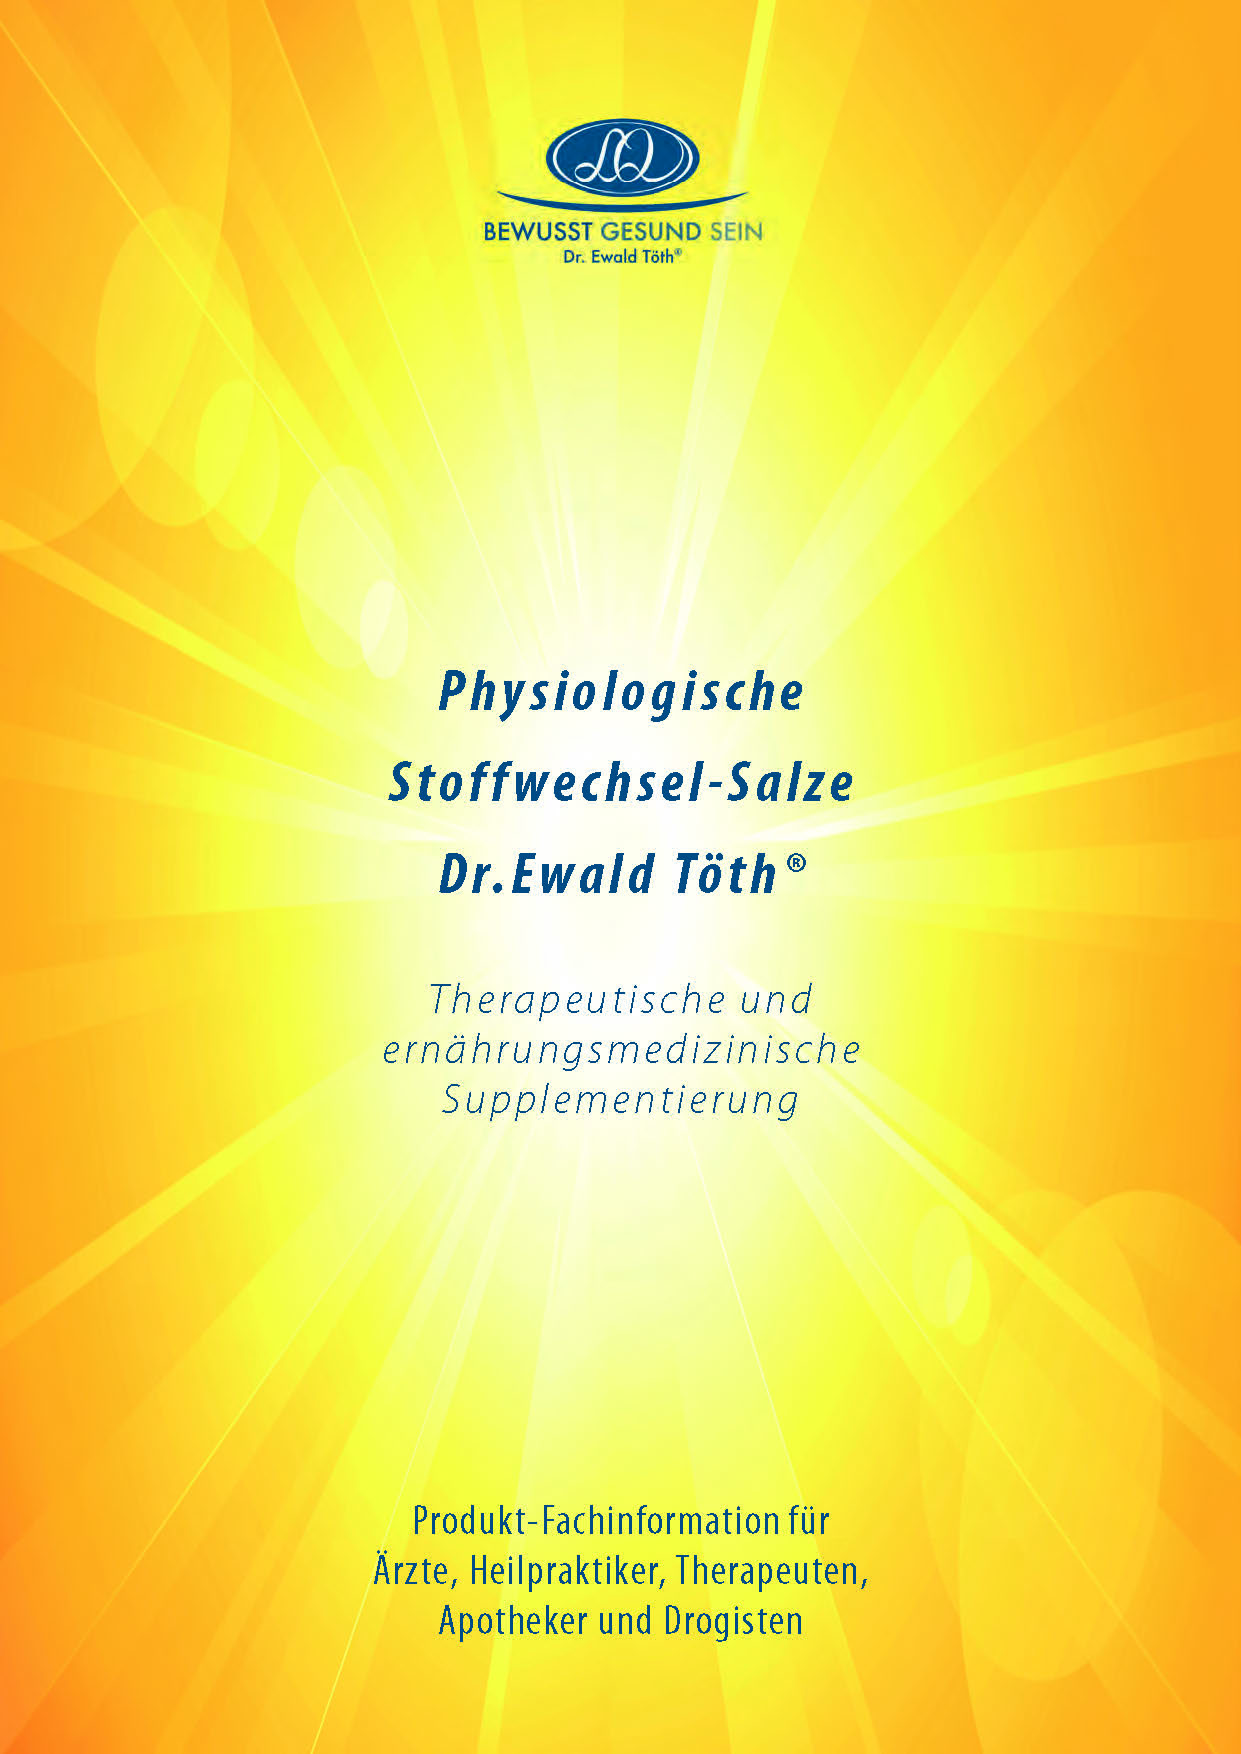 Physiologische Stoffwechsel-Salze Dr. Ewald Töth® [Digital]